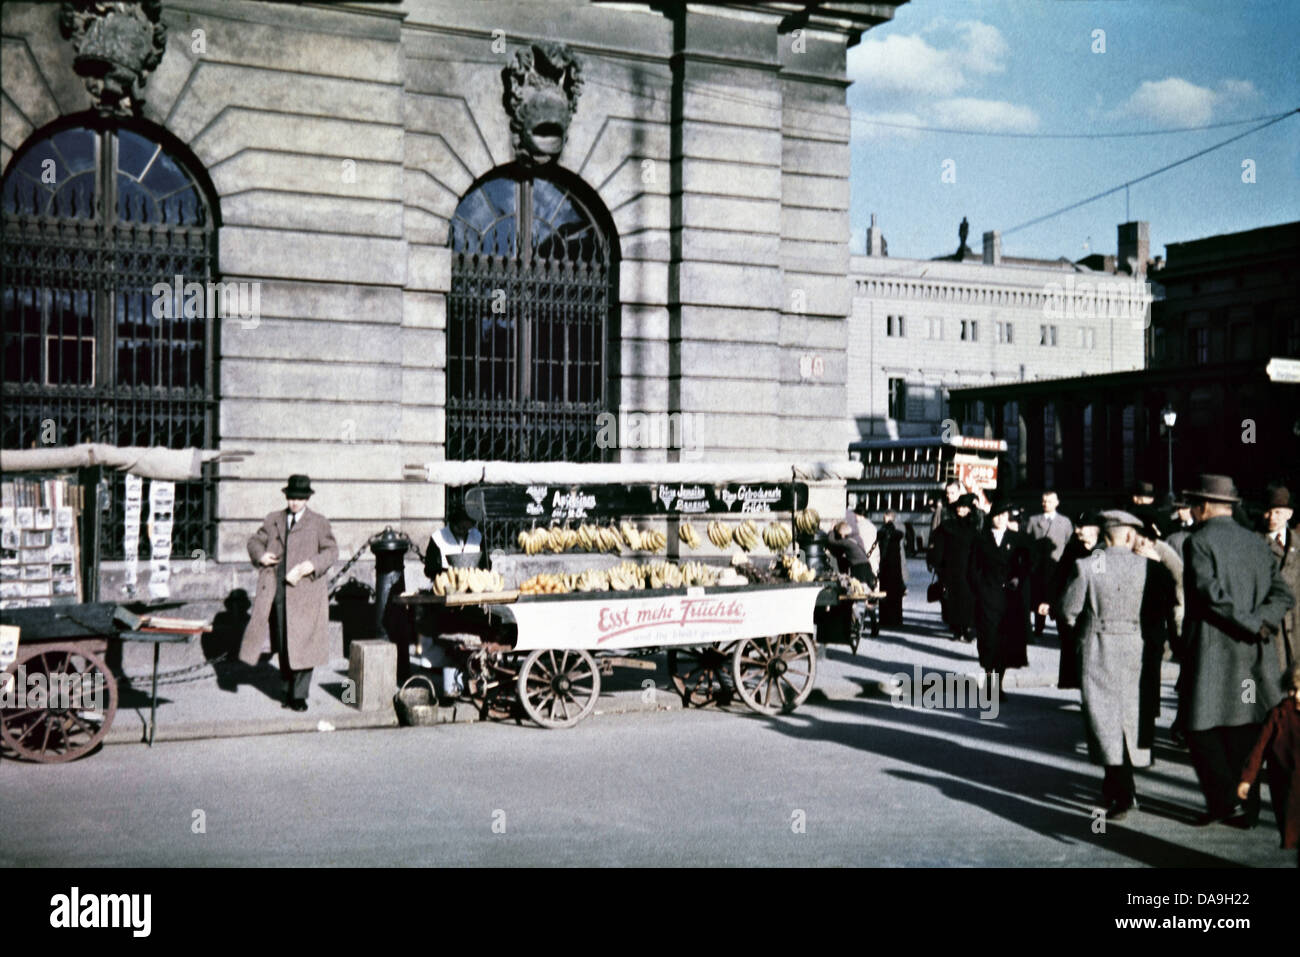 Third Reich, Nazi, National Socialist, national socialism, Germany, prewar, street vendor, fruits, bananas, armoury, Berlin, Eur Stock Photo